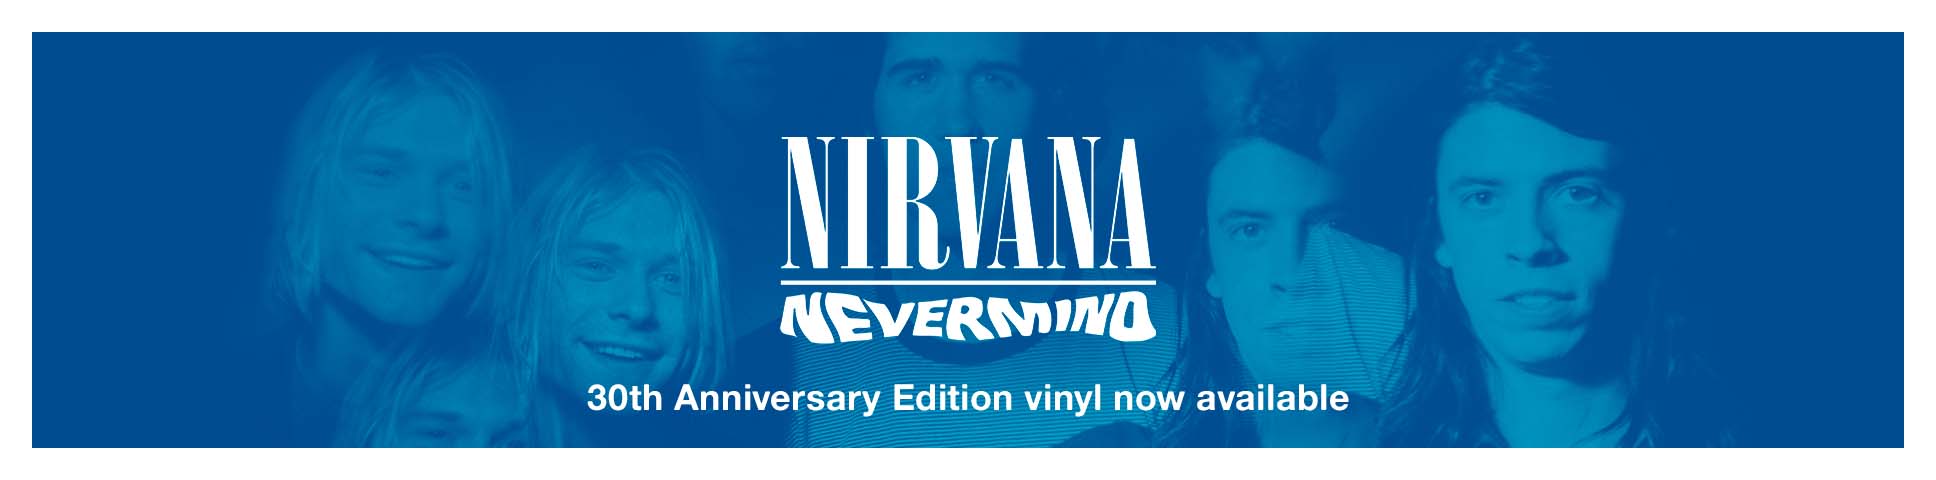 /Nirvana Exclusive Vinyl